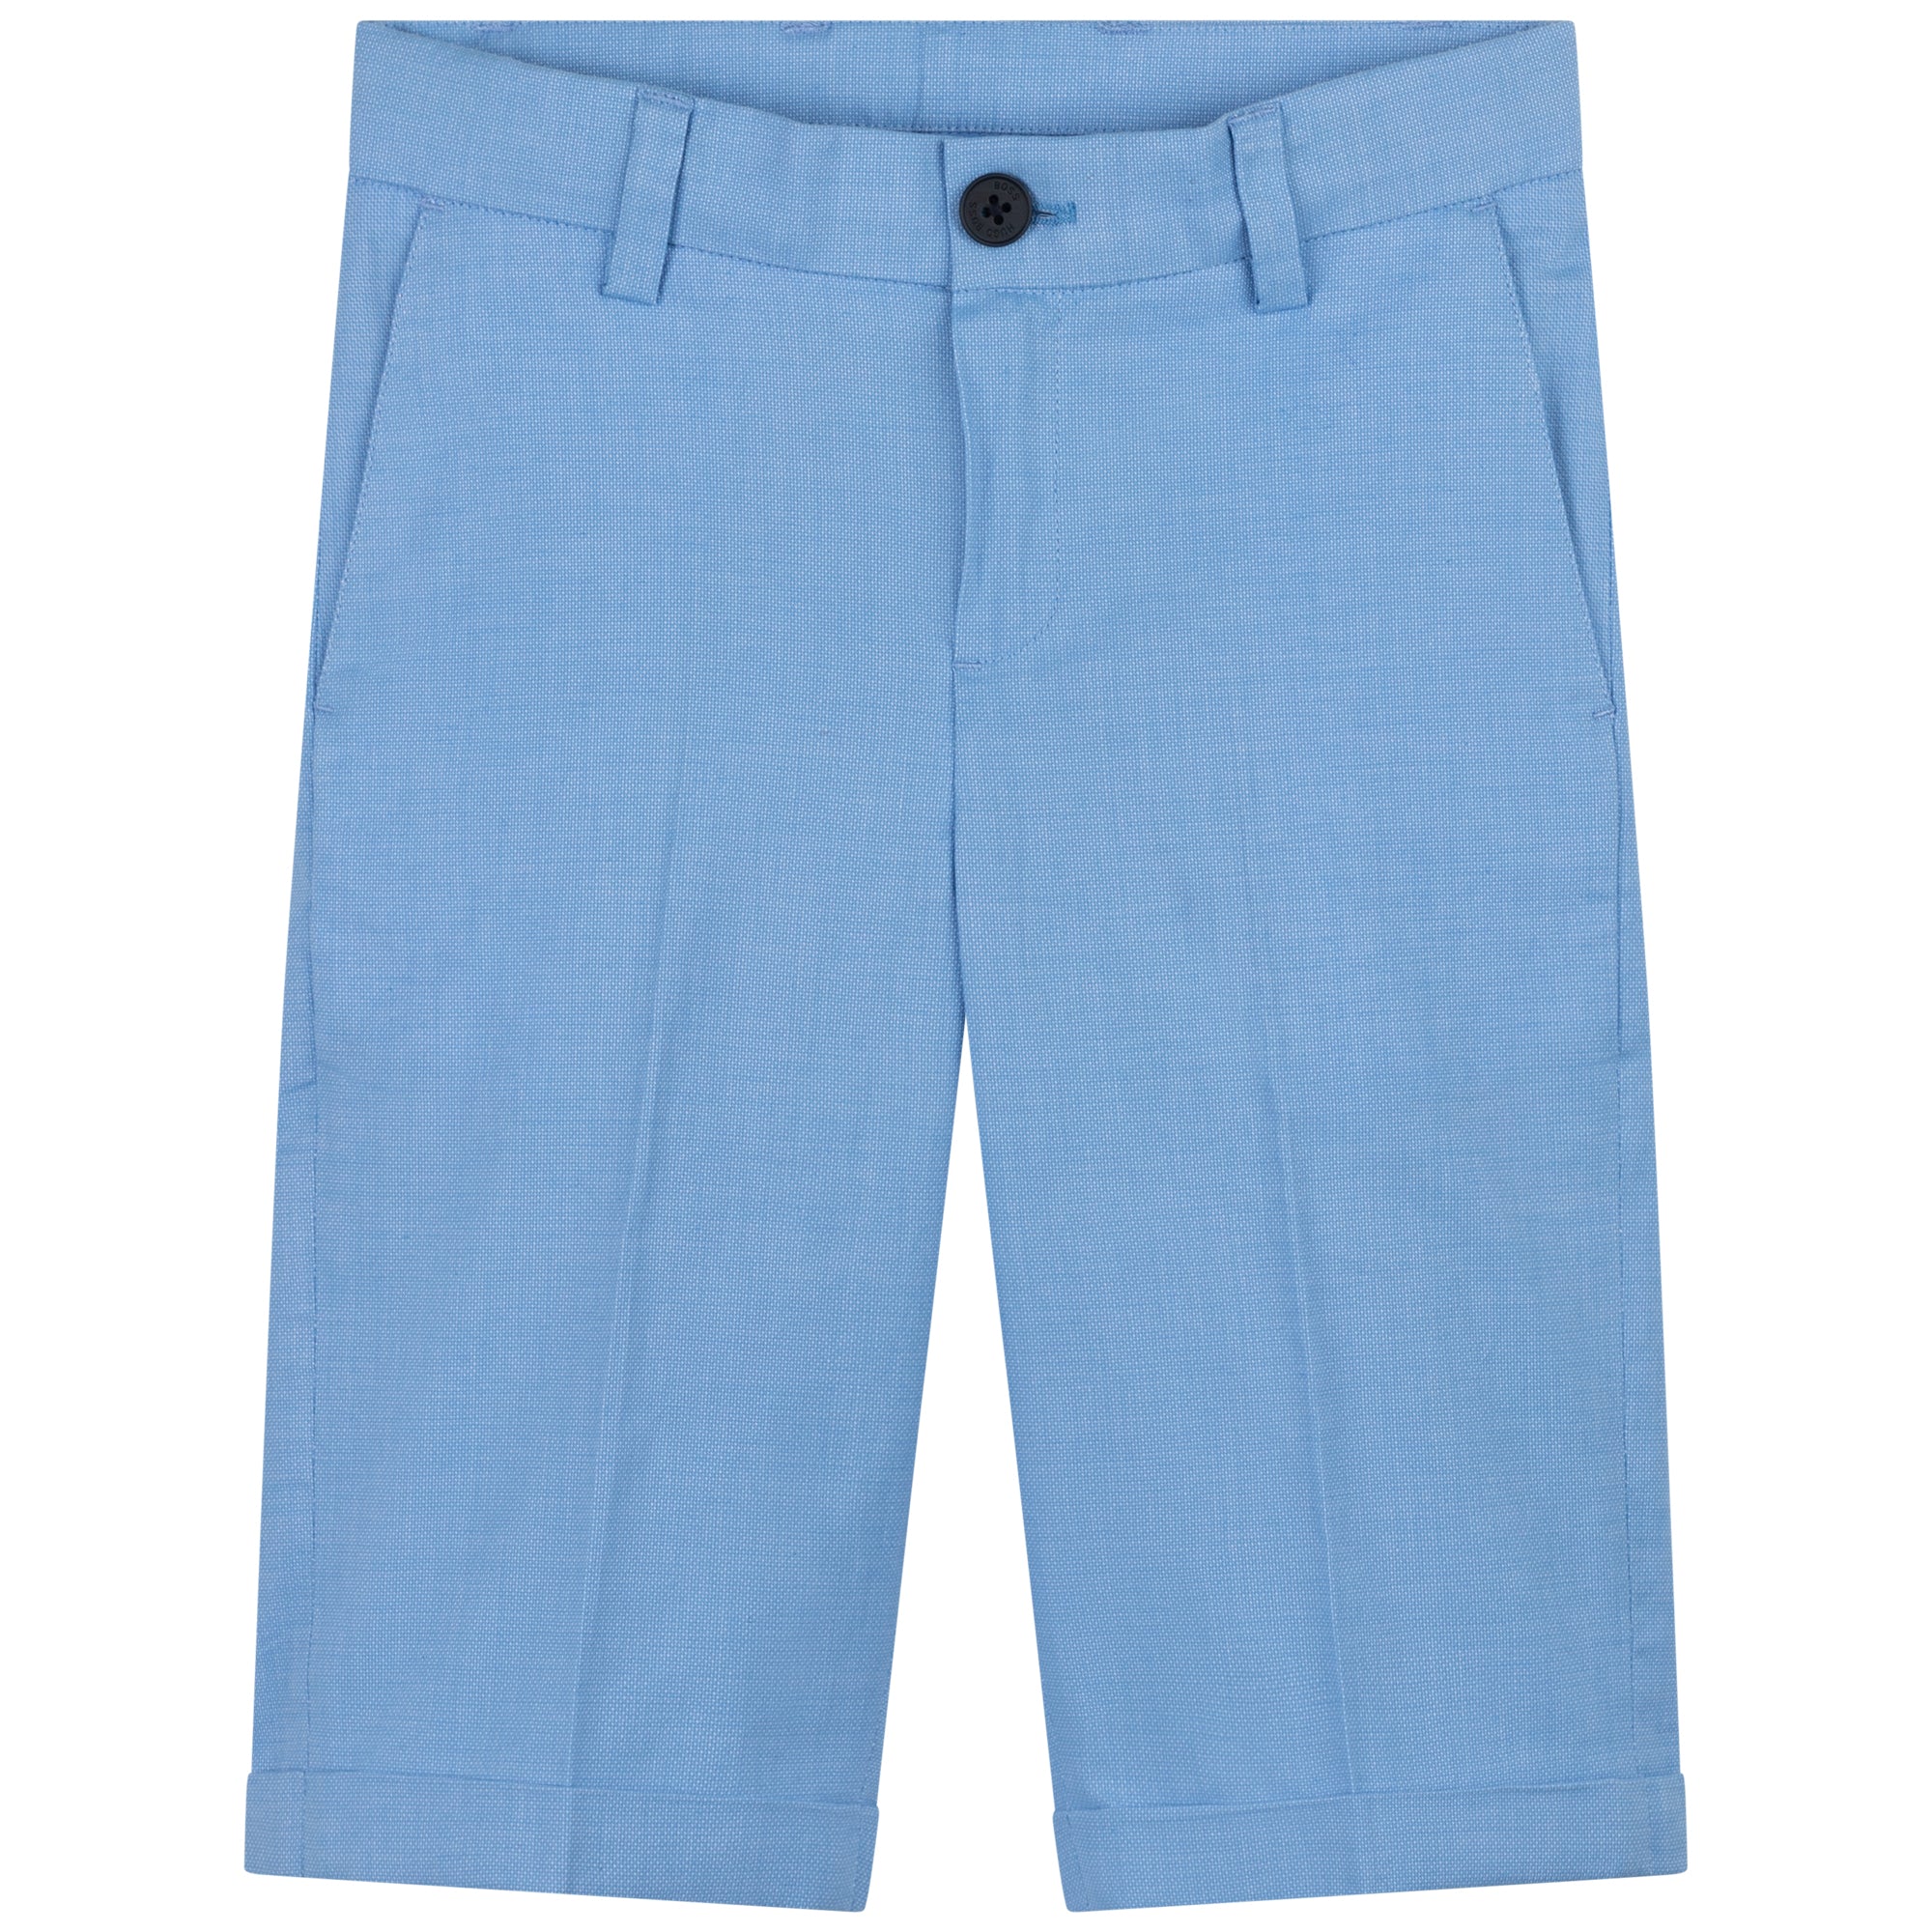 Hugo Boss Blue Shorts